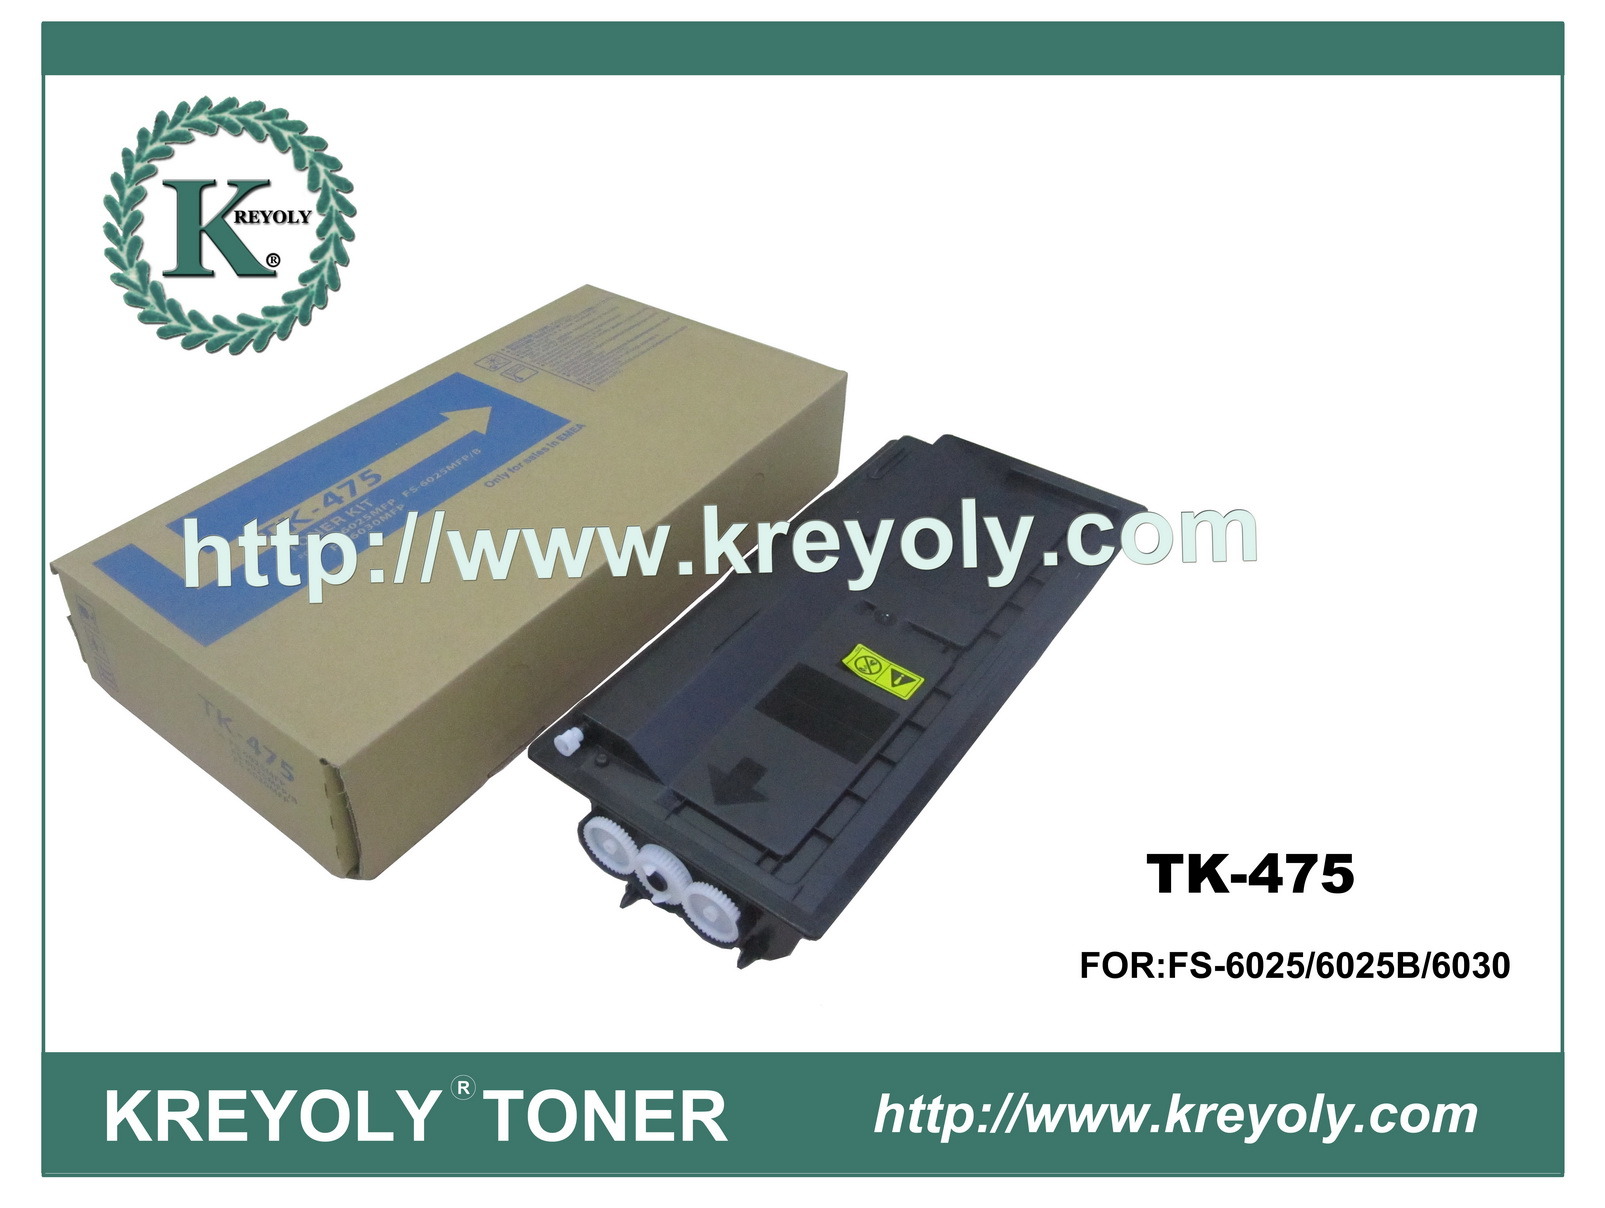 Premium Kyocera Copier Toner for TK-475